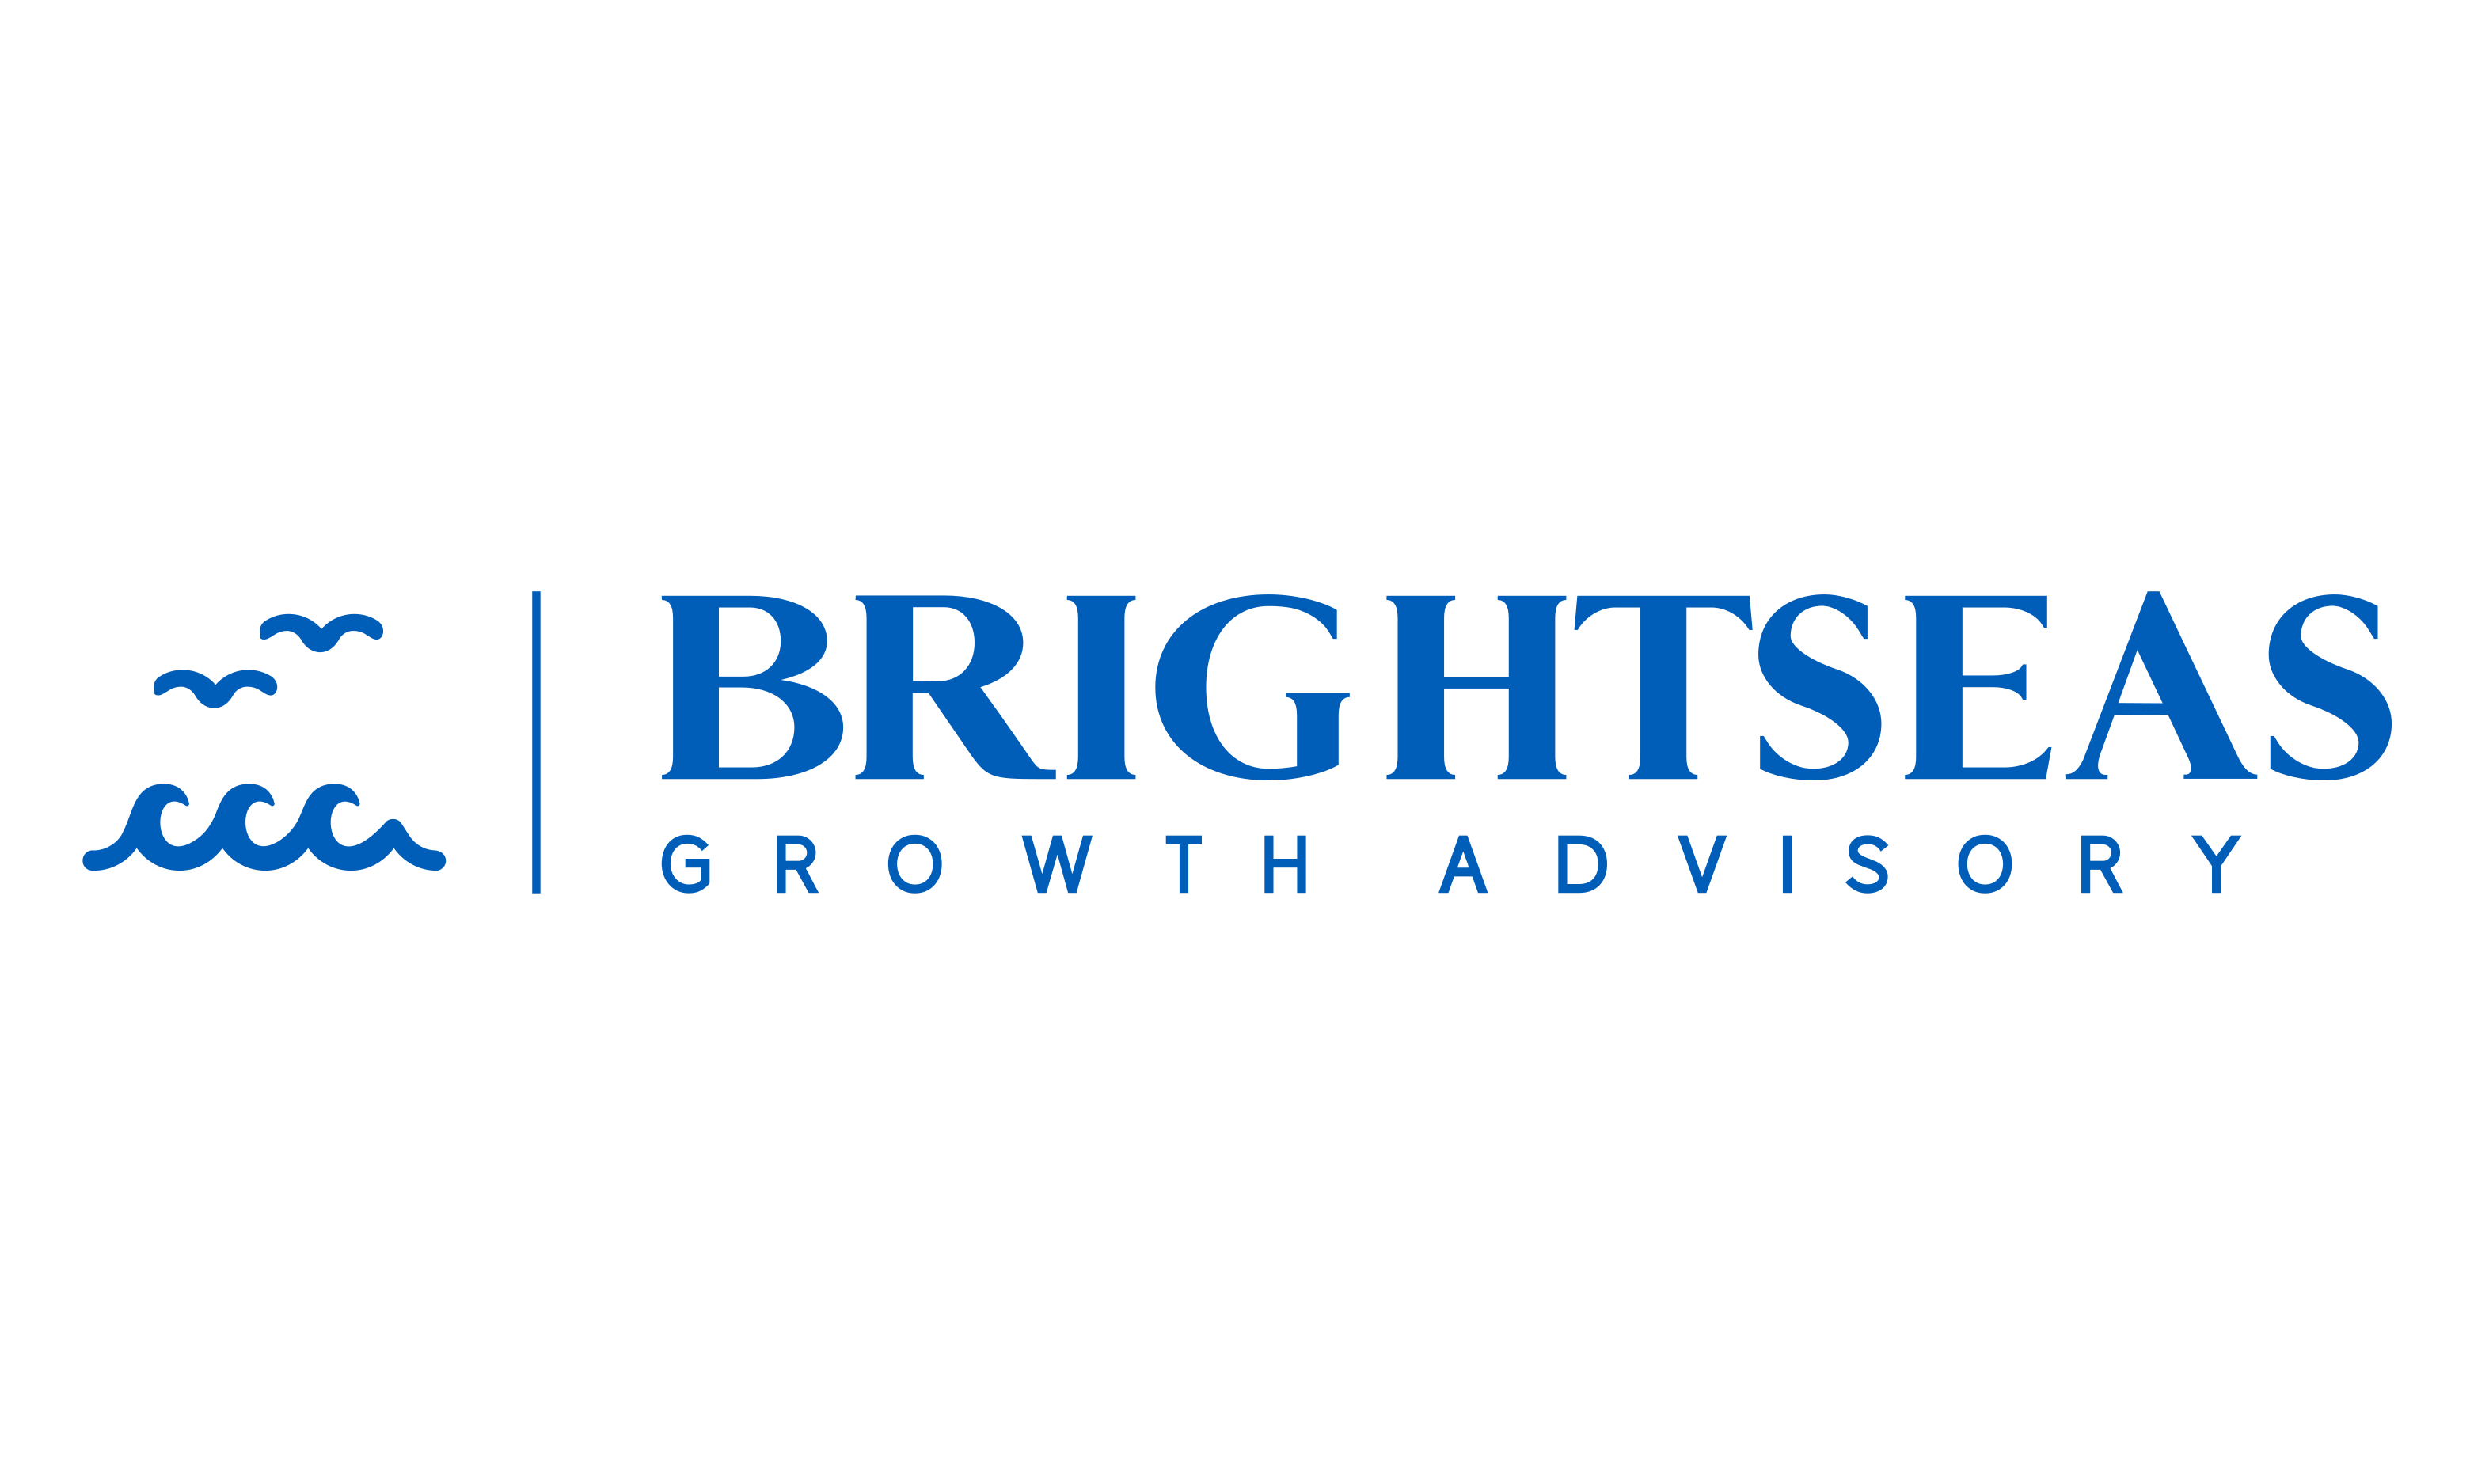 Brightseas Growth Advisory